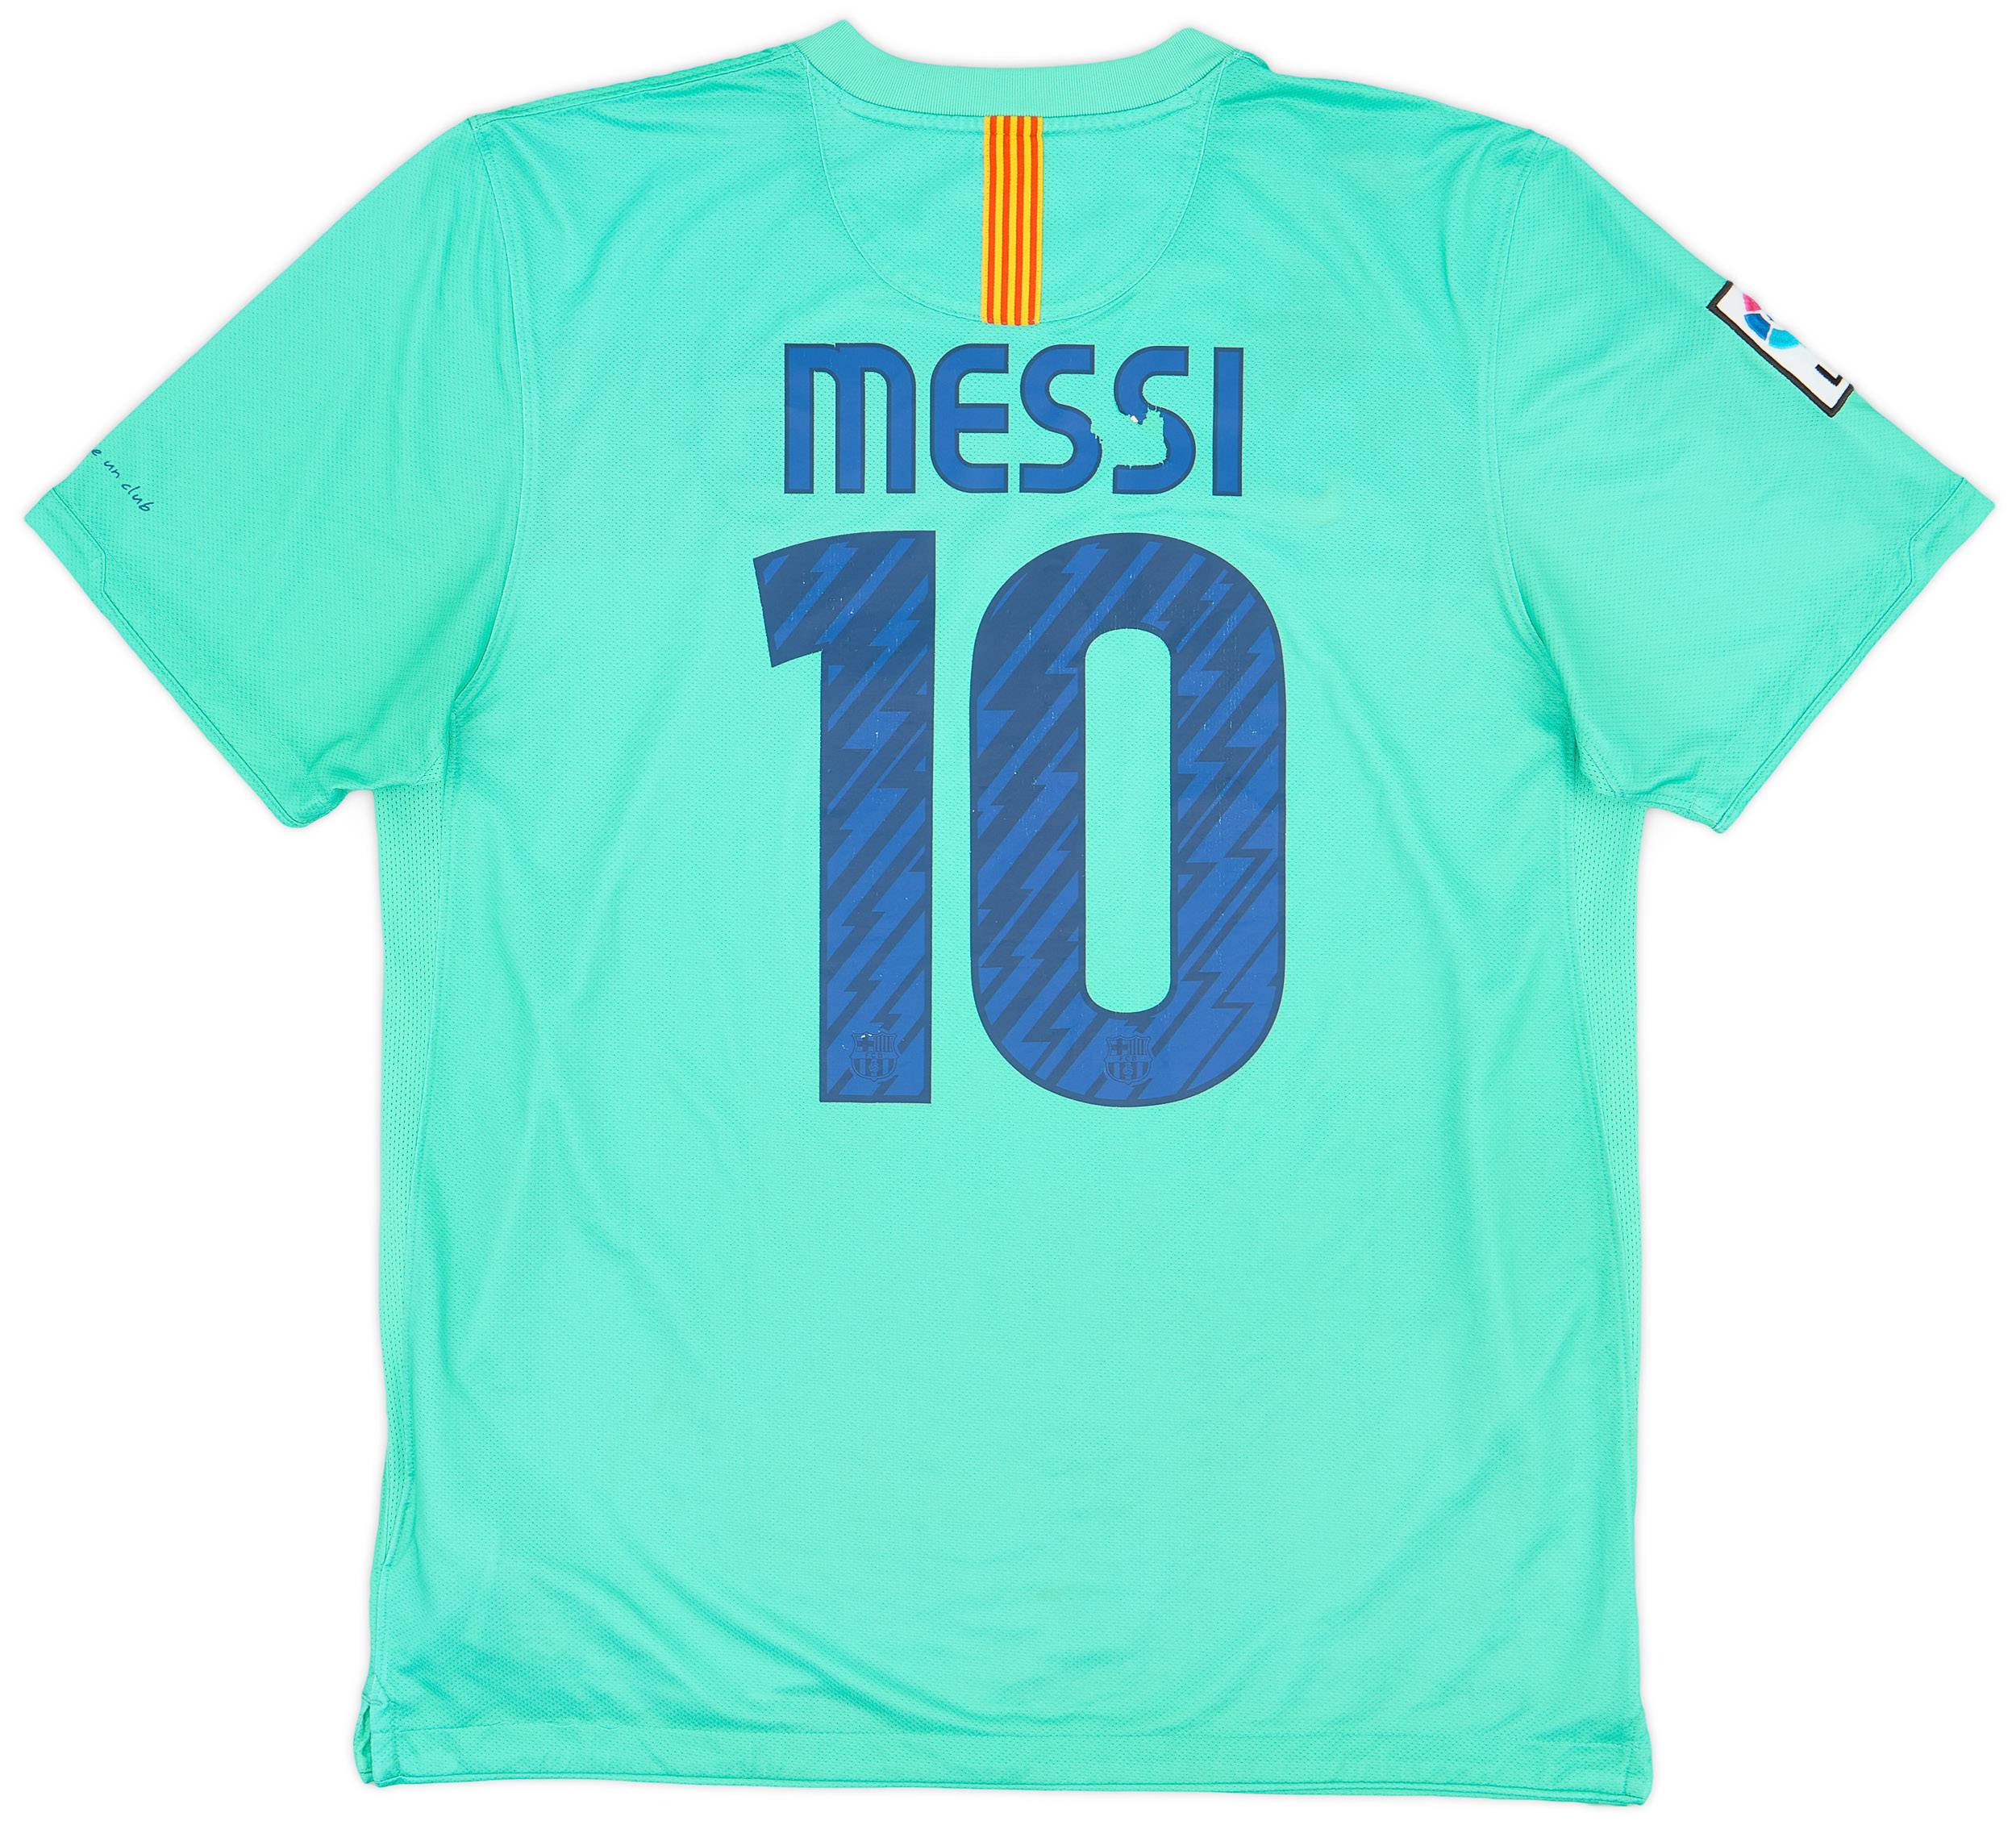 2010-11 Barcelona Away Shirt Messi #10 - 5/10 - (L)